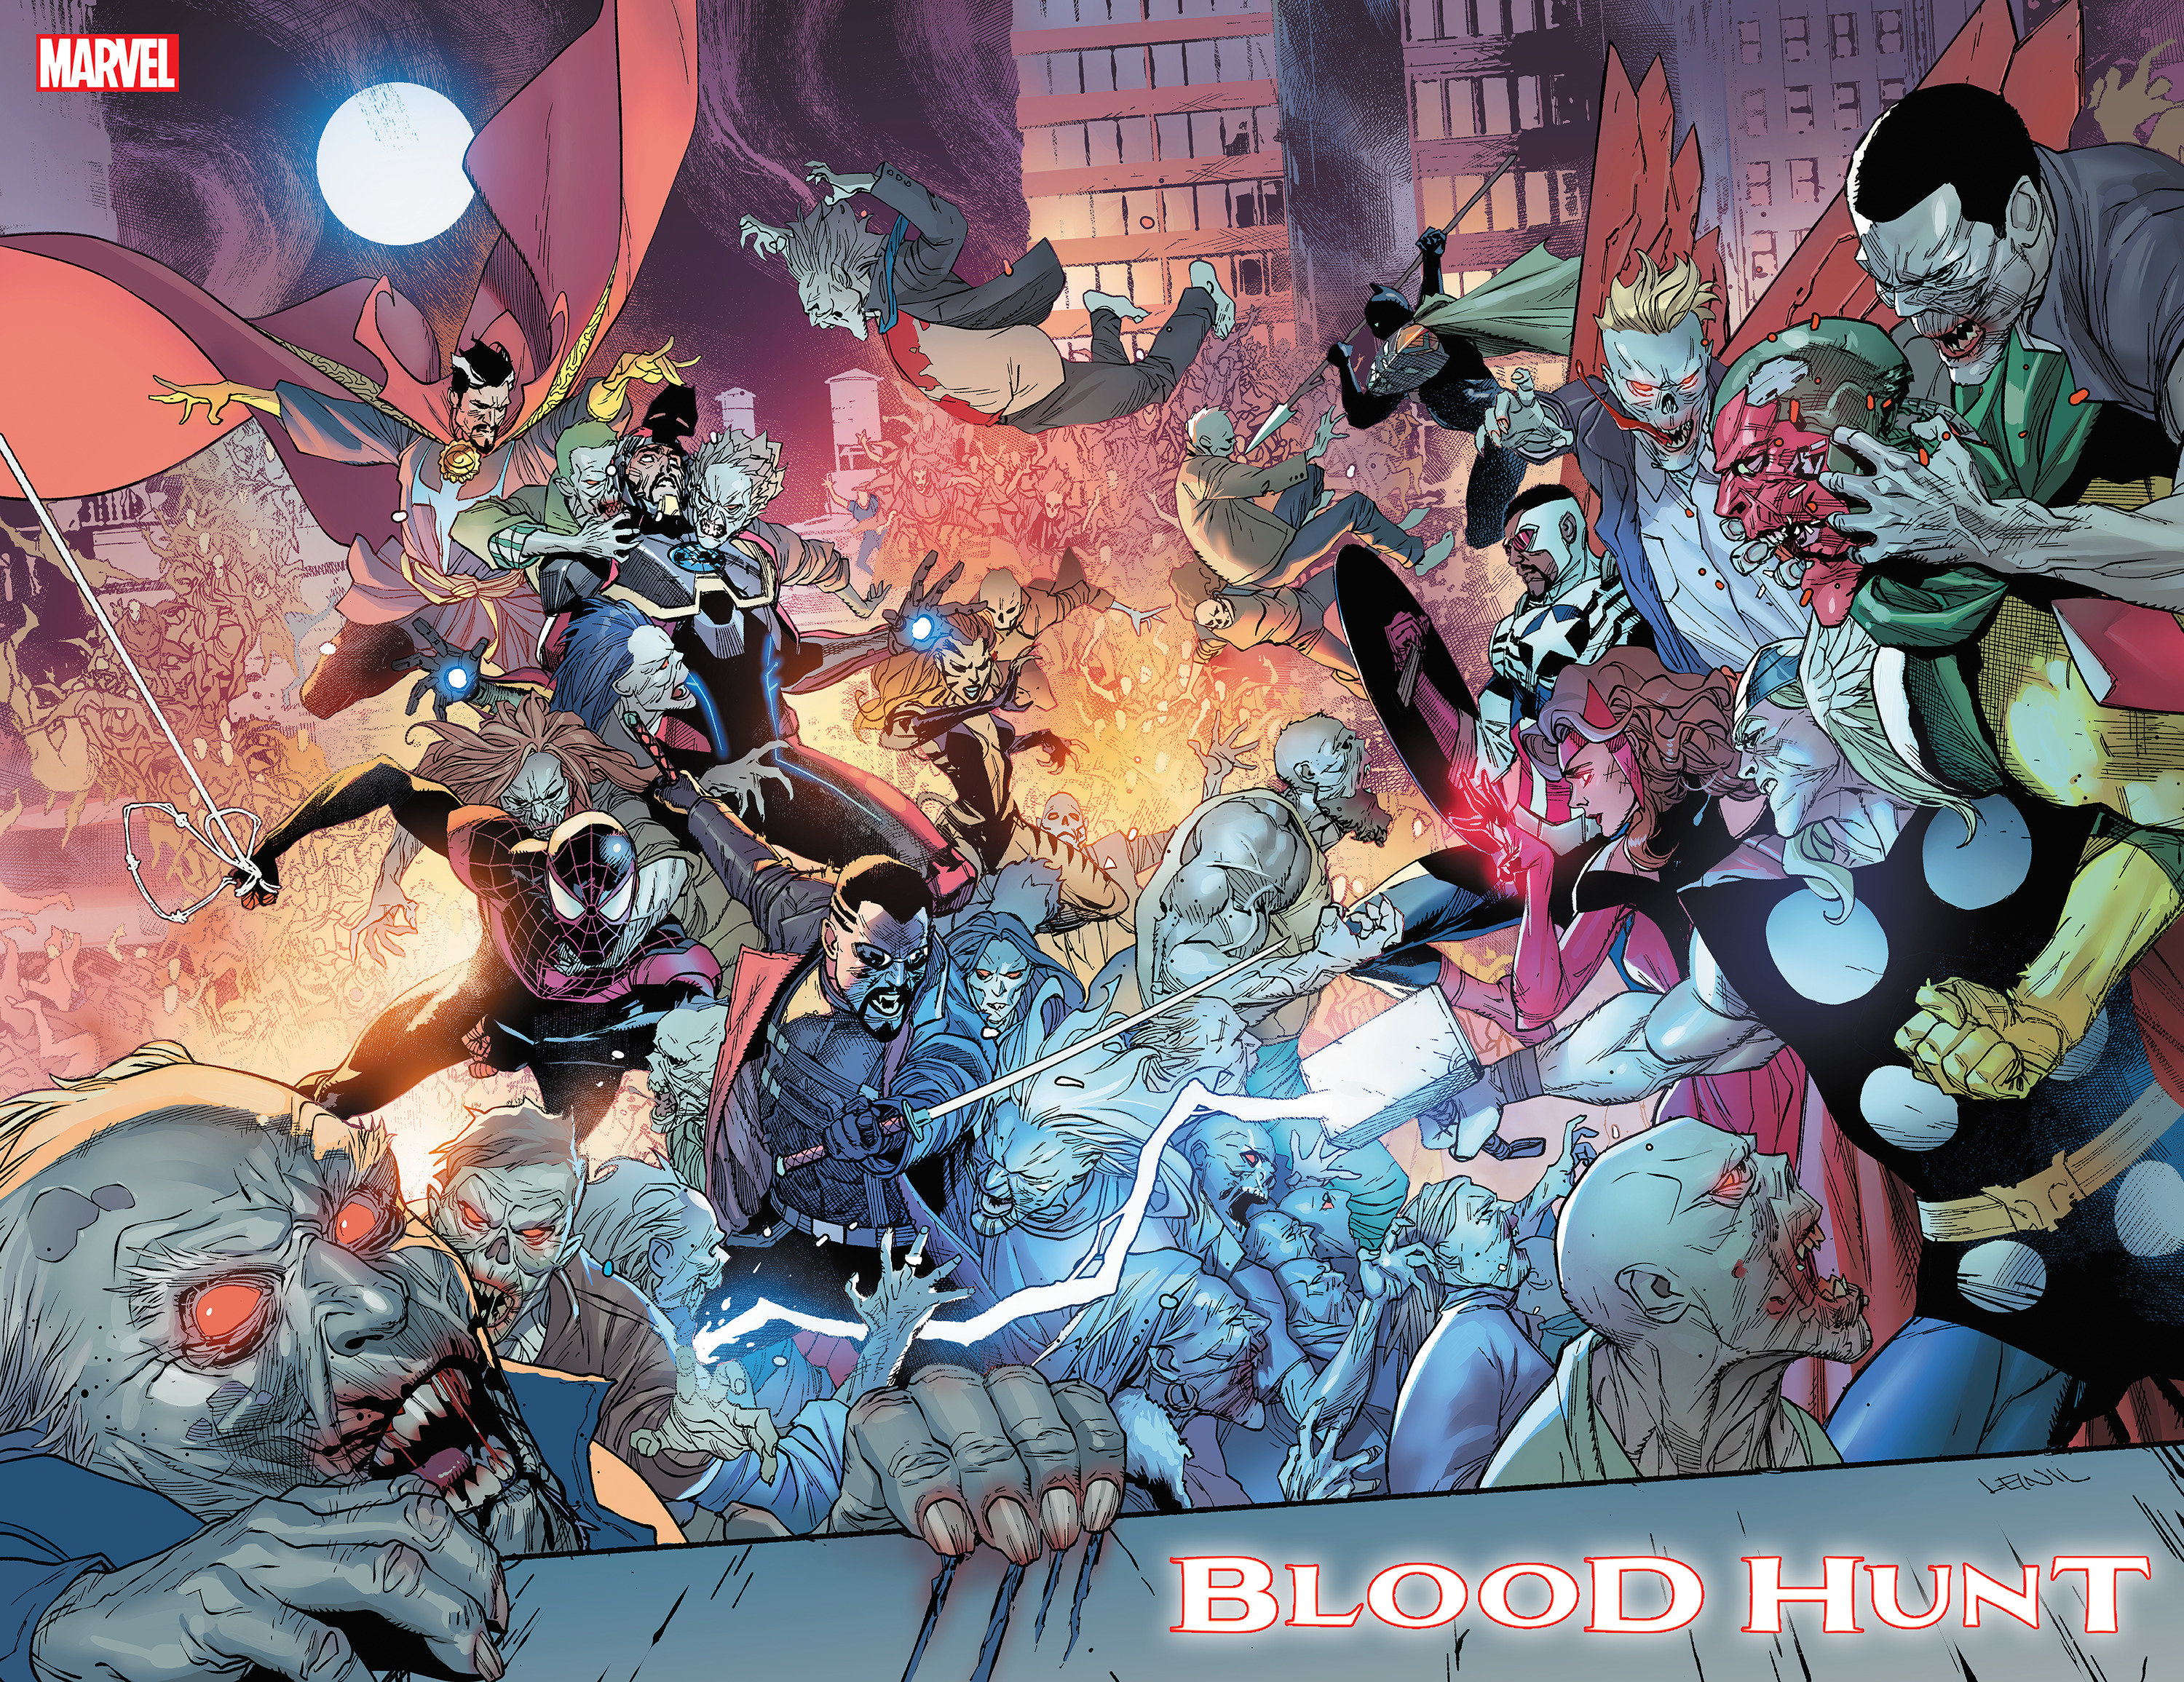 Blood Hunt #1 Leinil Yu Wraparound Variant (Bloodhunt)